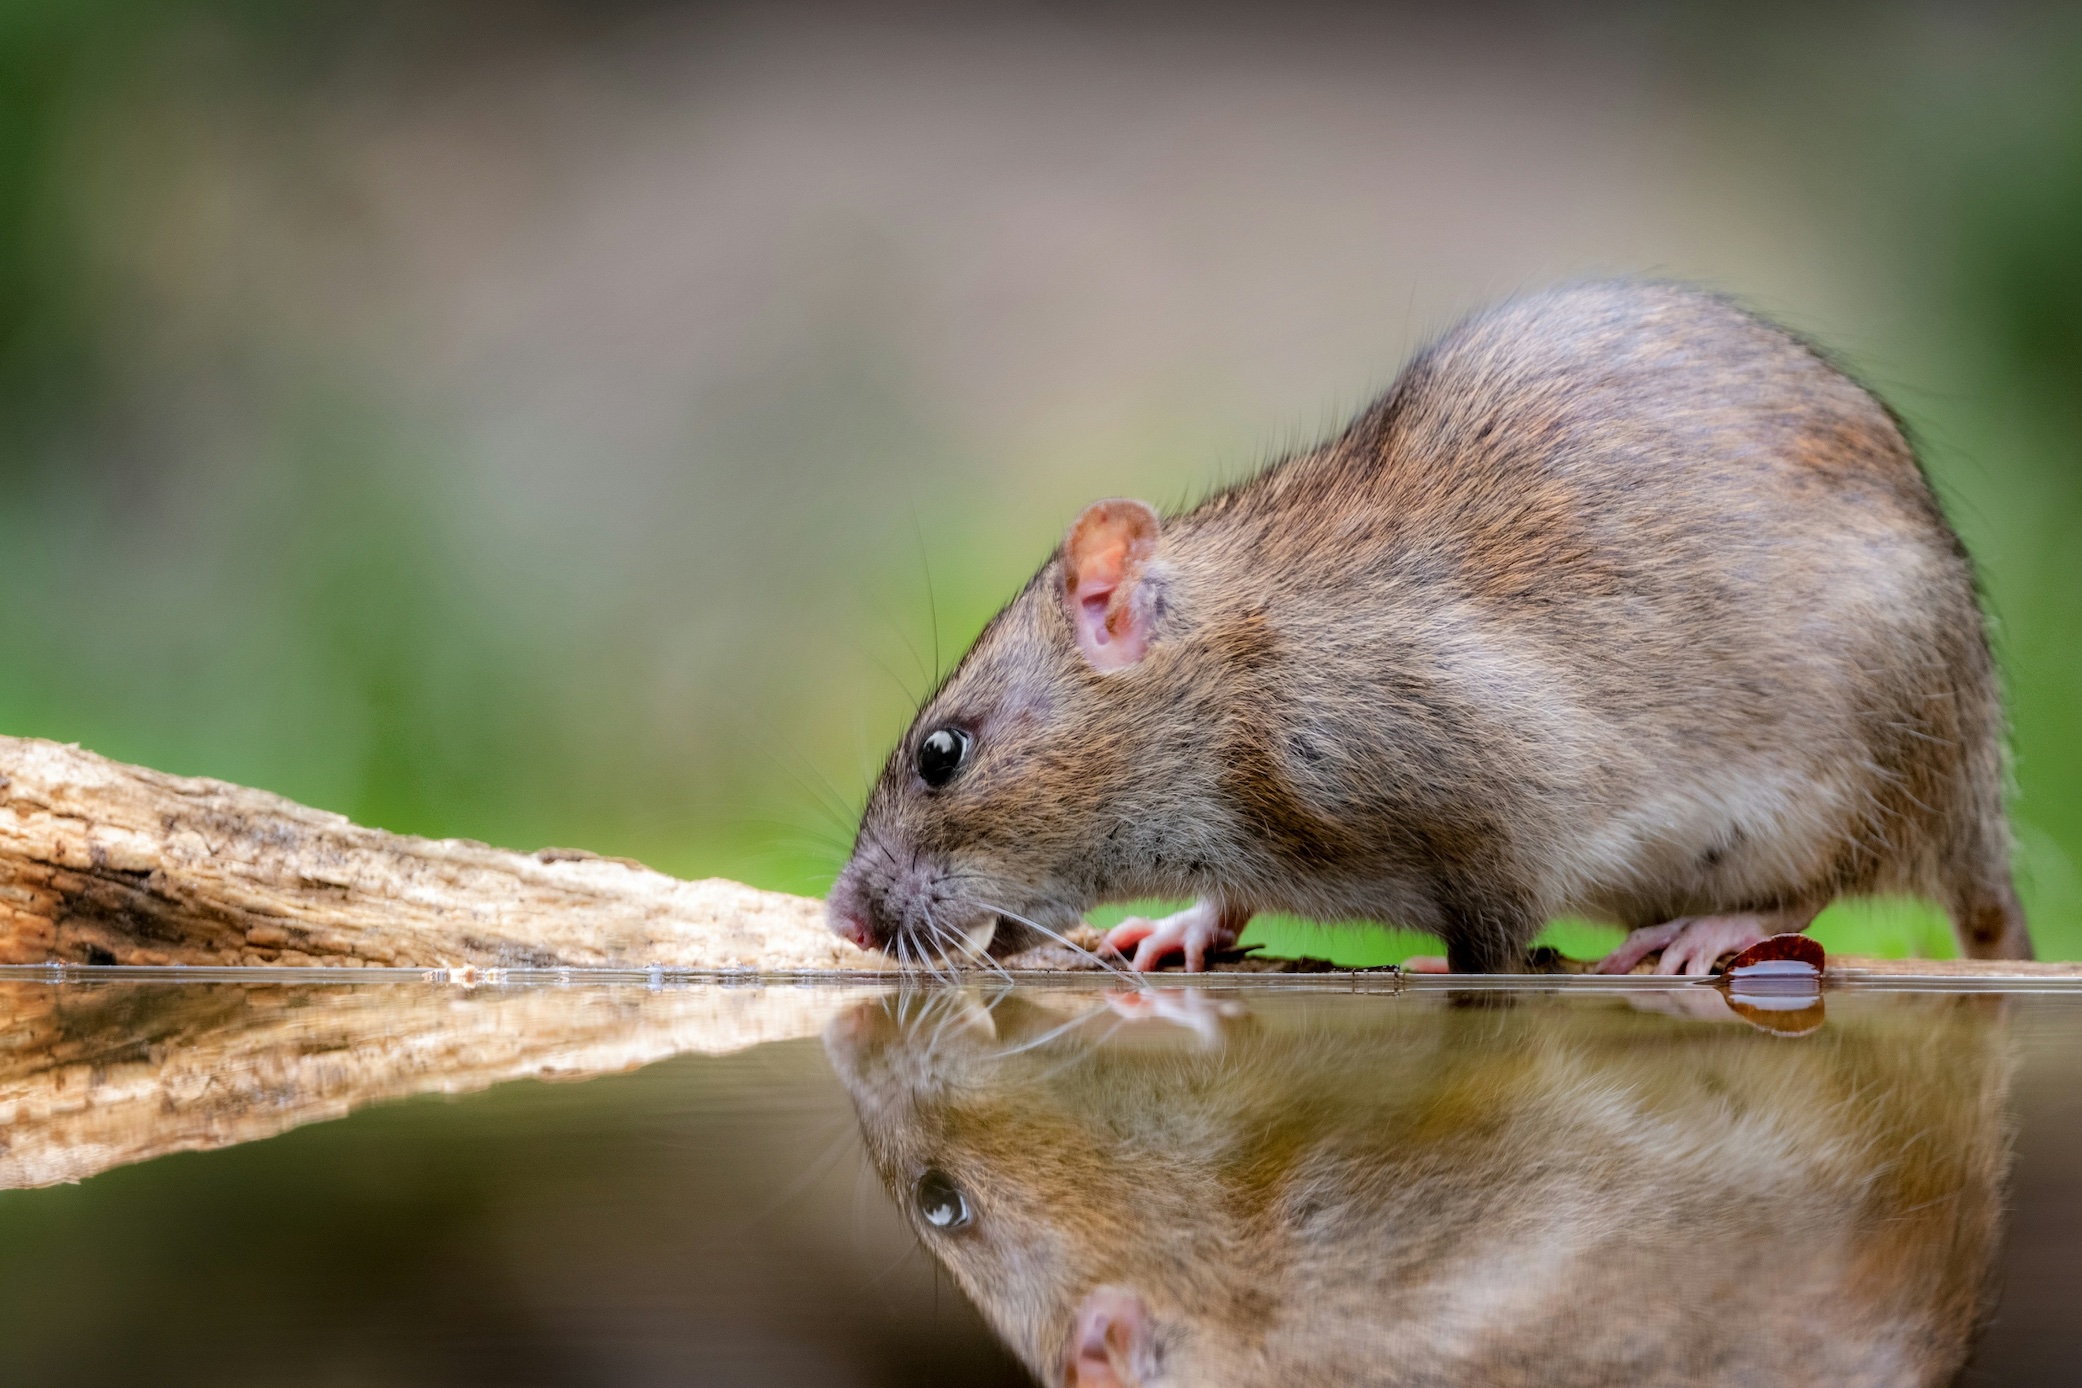 Rat drinking at puddle seeing its reflection; image by Patrick Kalkman, via Unsplash.com.